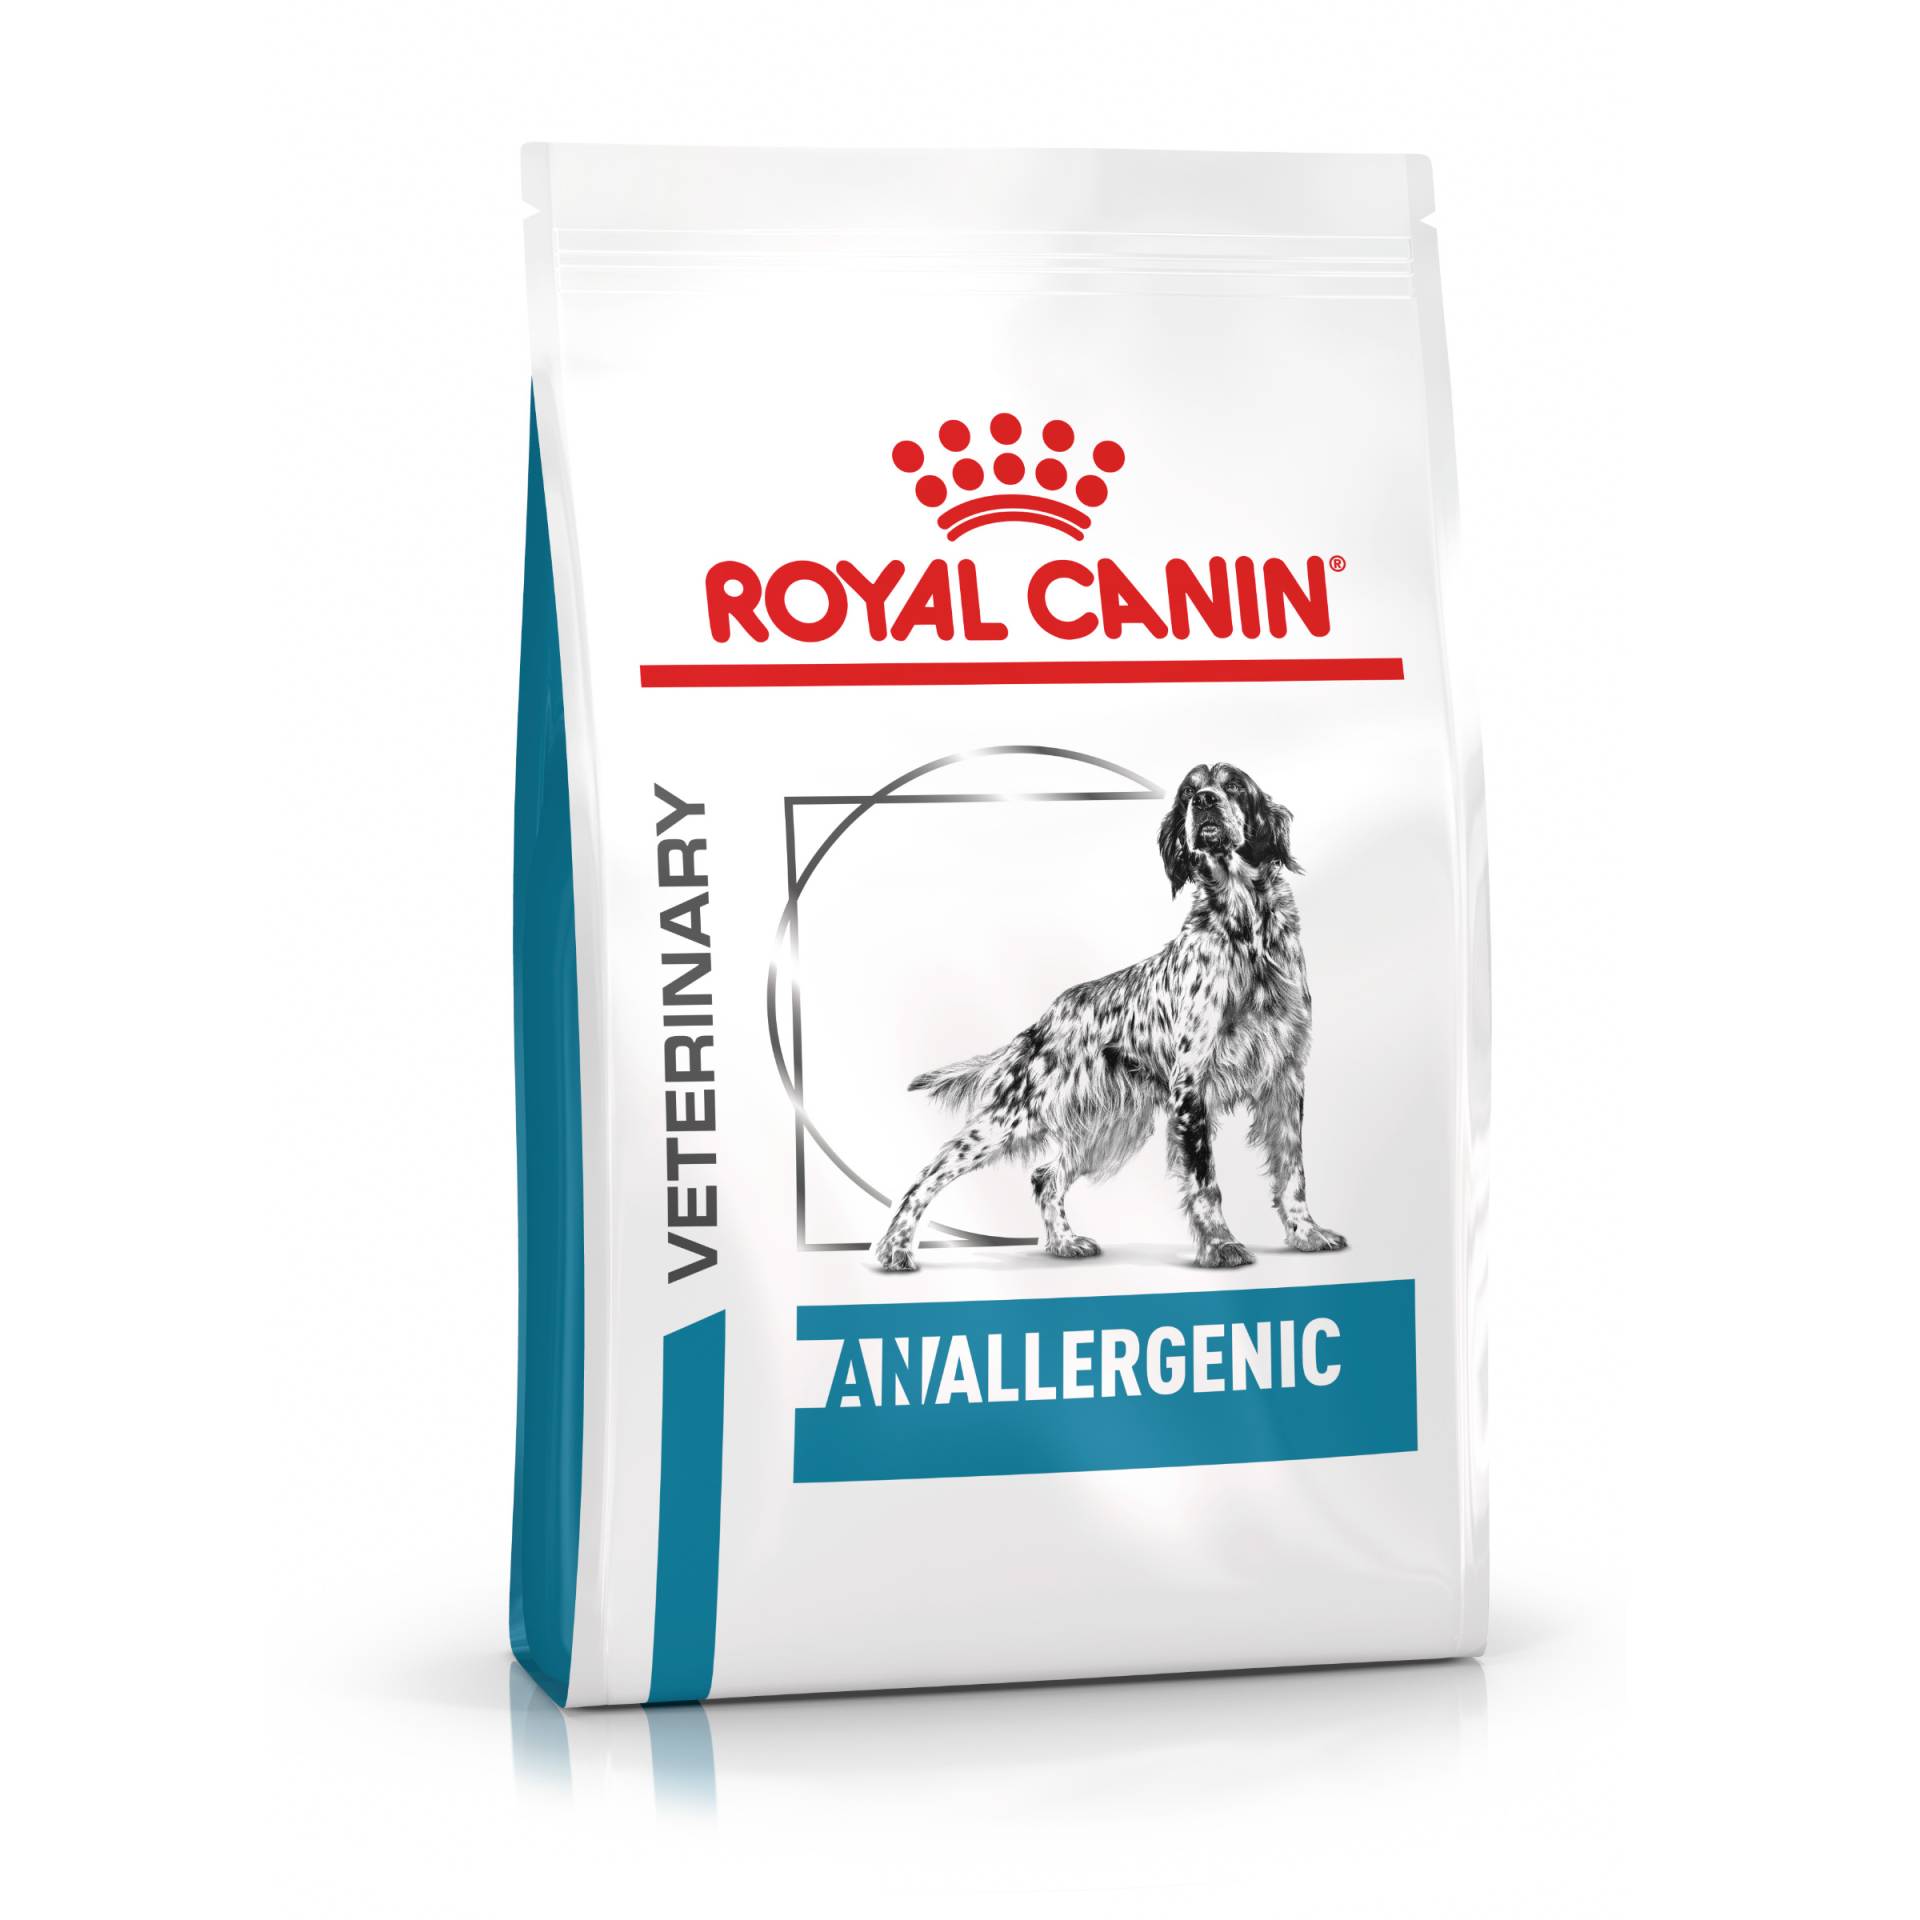 Royal Canin Veterinary Canine Anallergenic - Sparpaket: 2 x 8 kg von Royal Canin Veterinary Diet